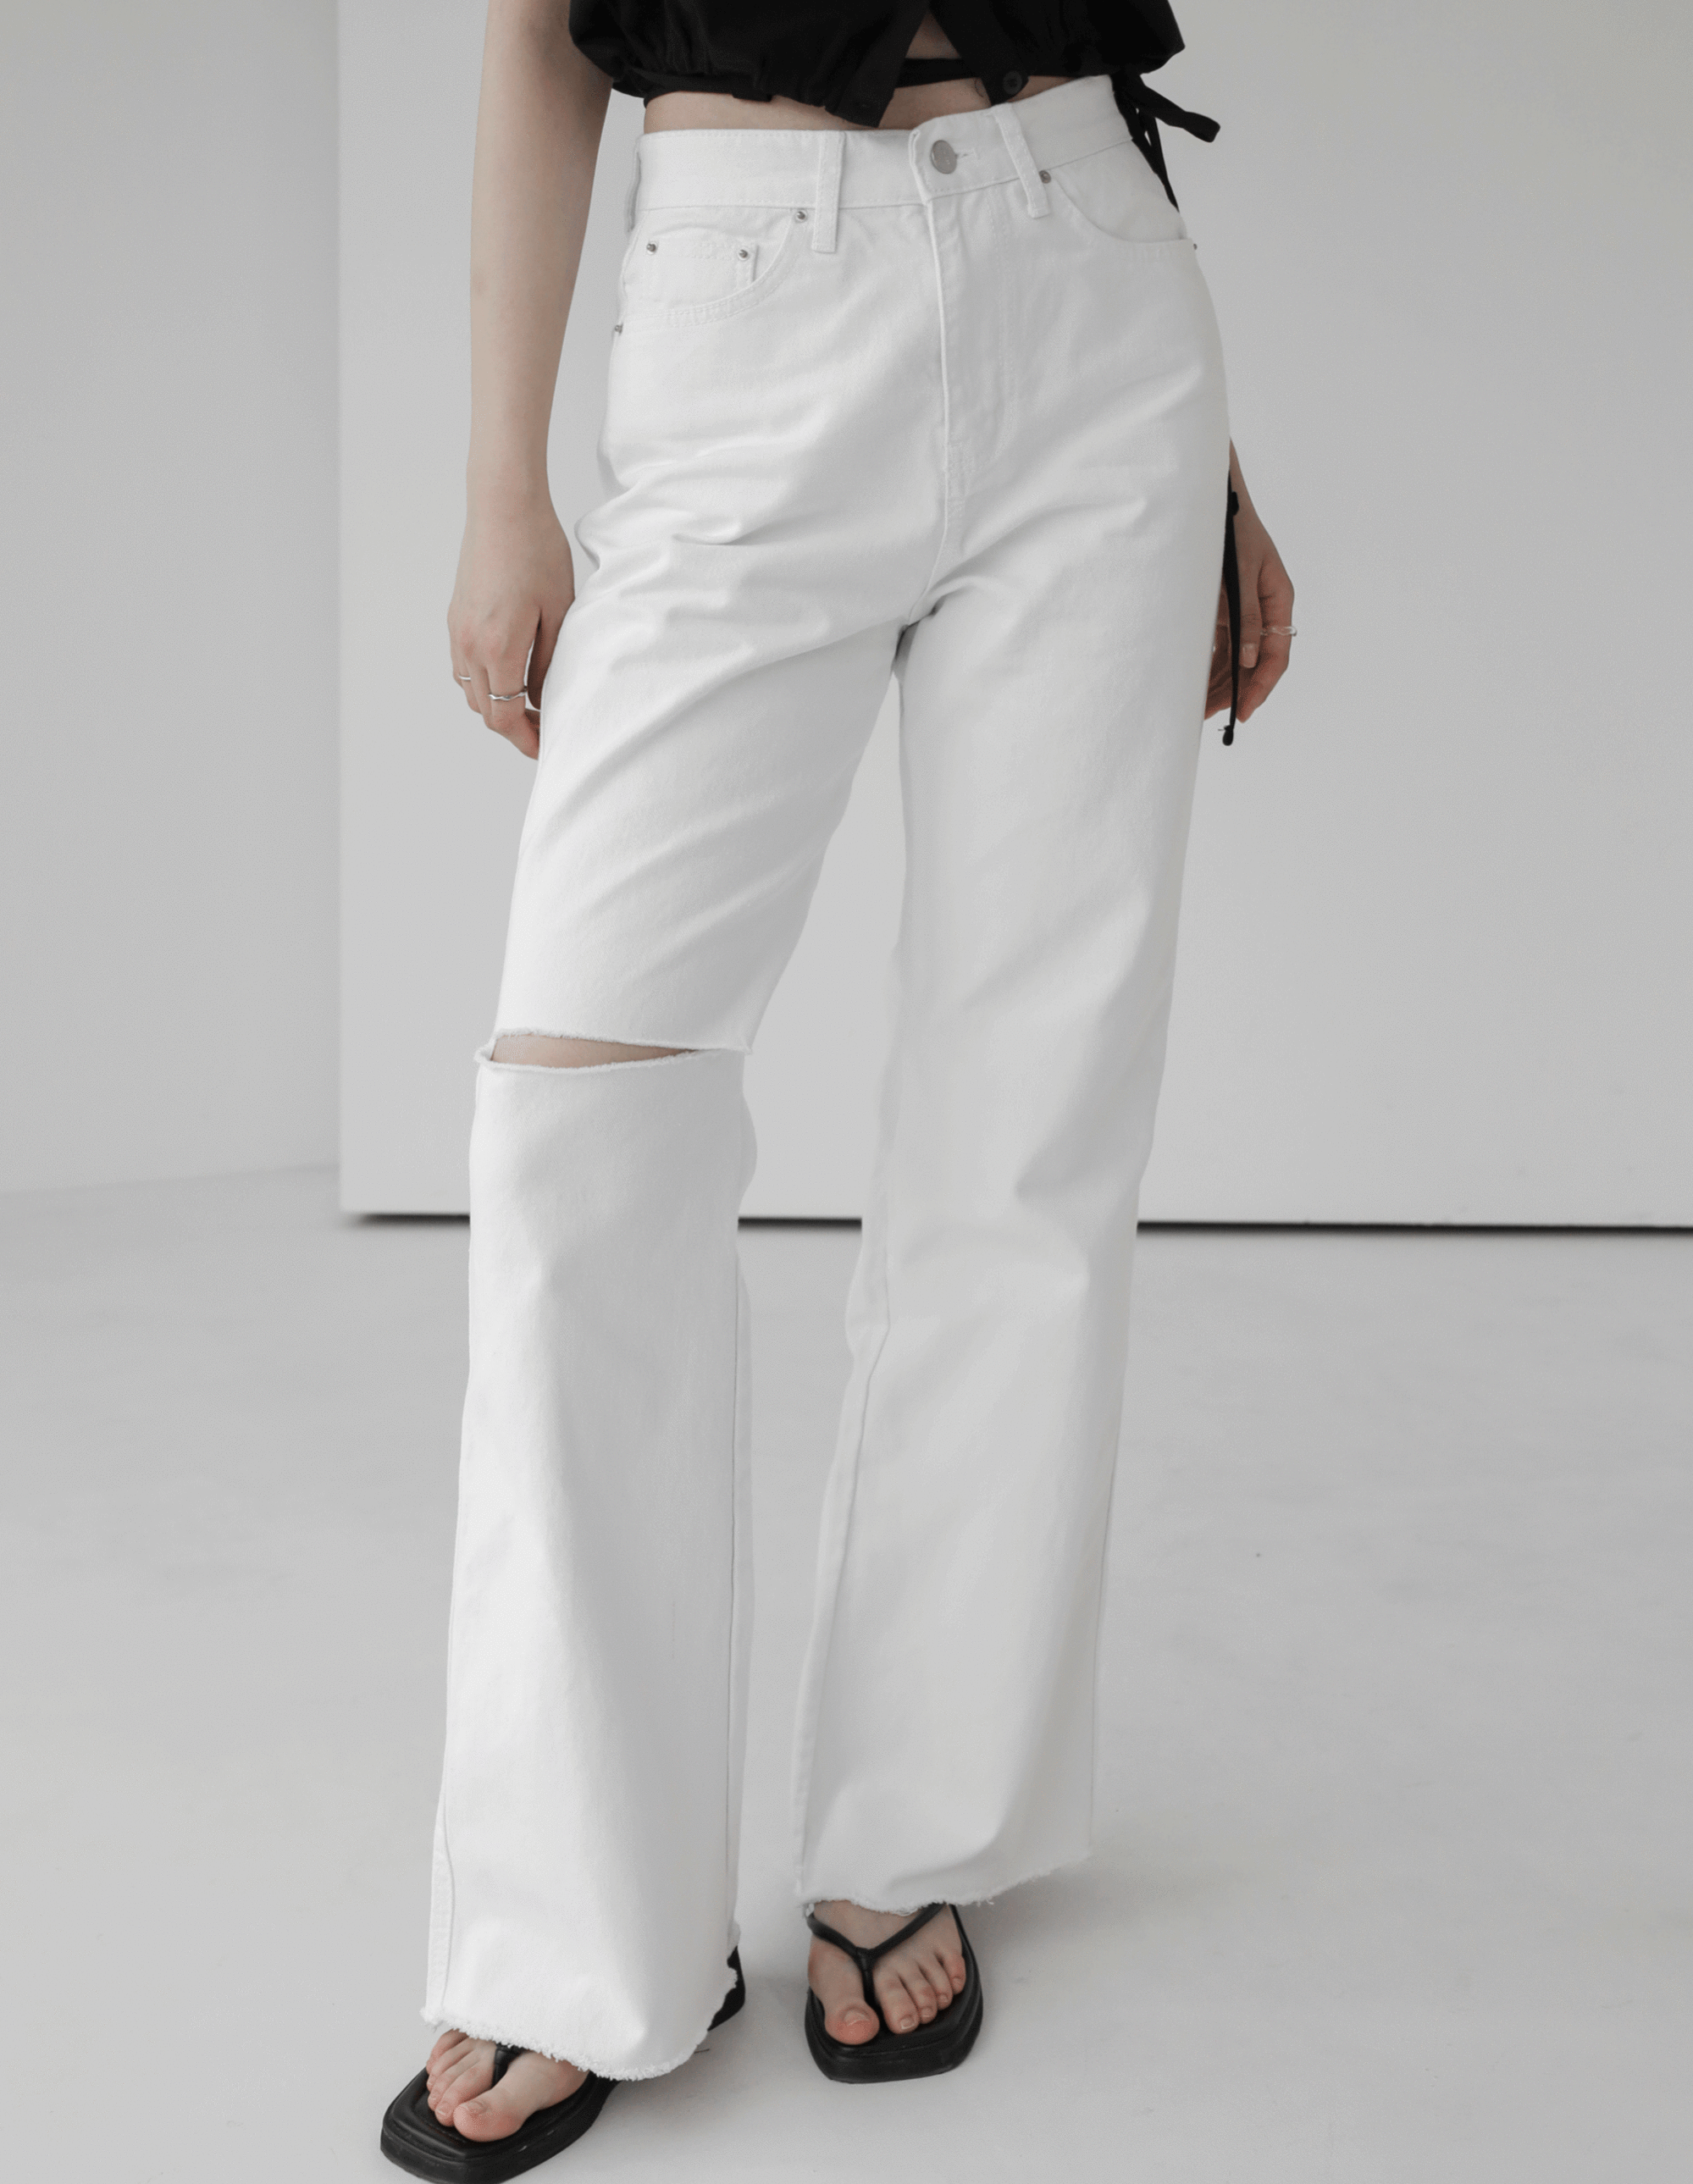 Slit White Cotton Pants